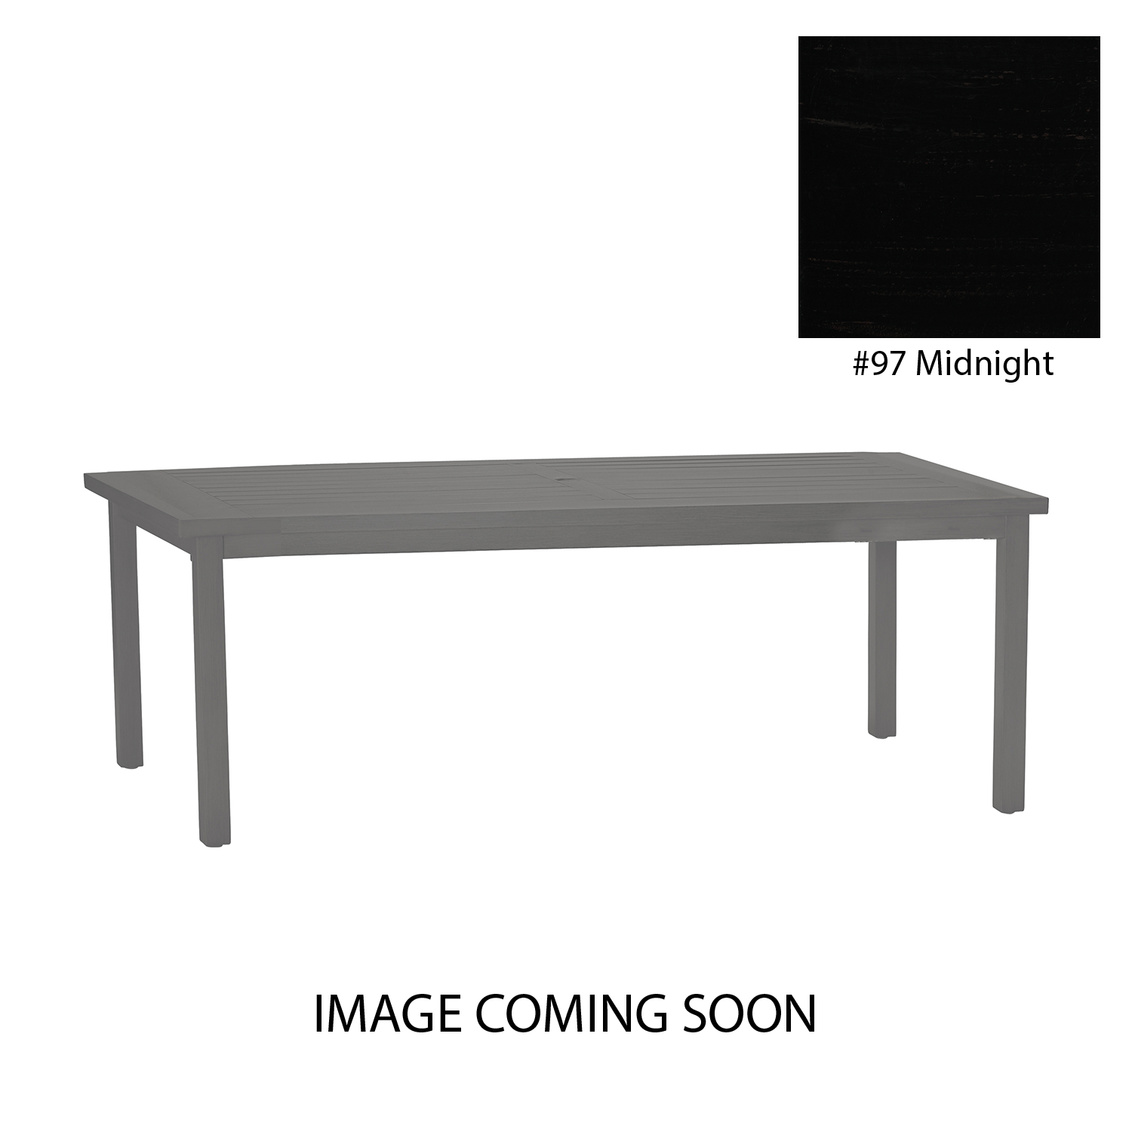 club aluminum rectangular dining table in midnight product image